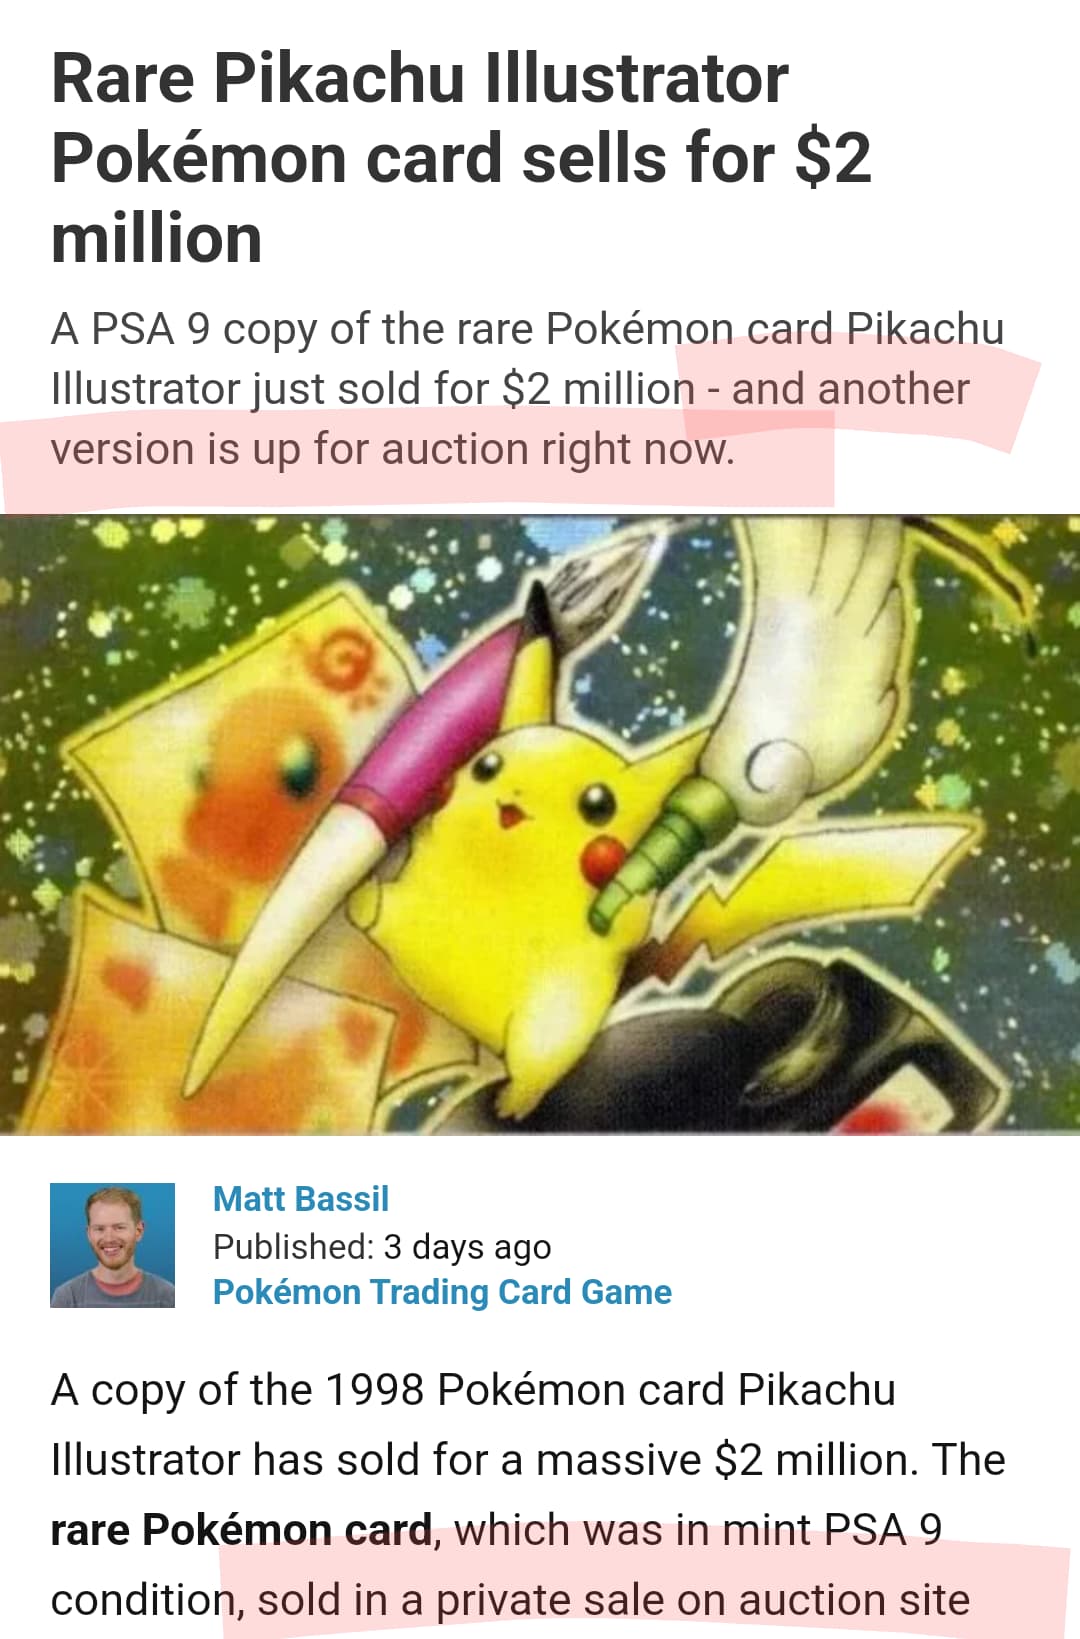 Rare Pikachu Illustrator Pokémon card sells for $2 million